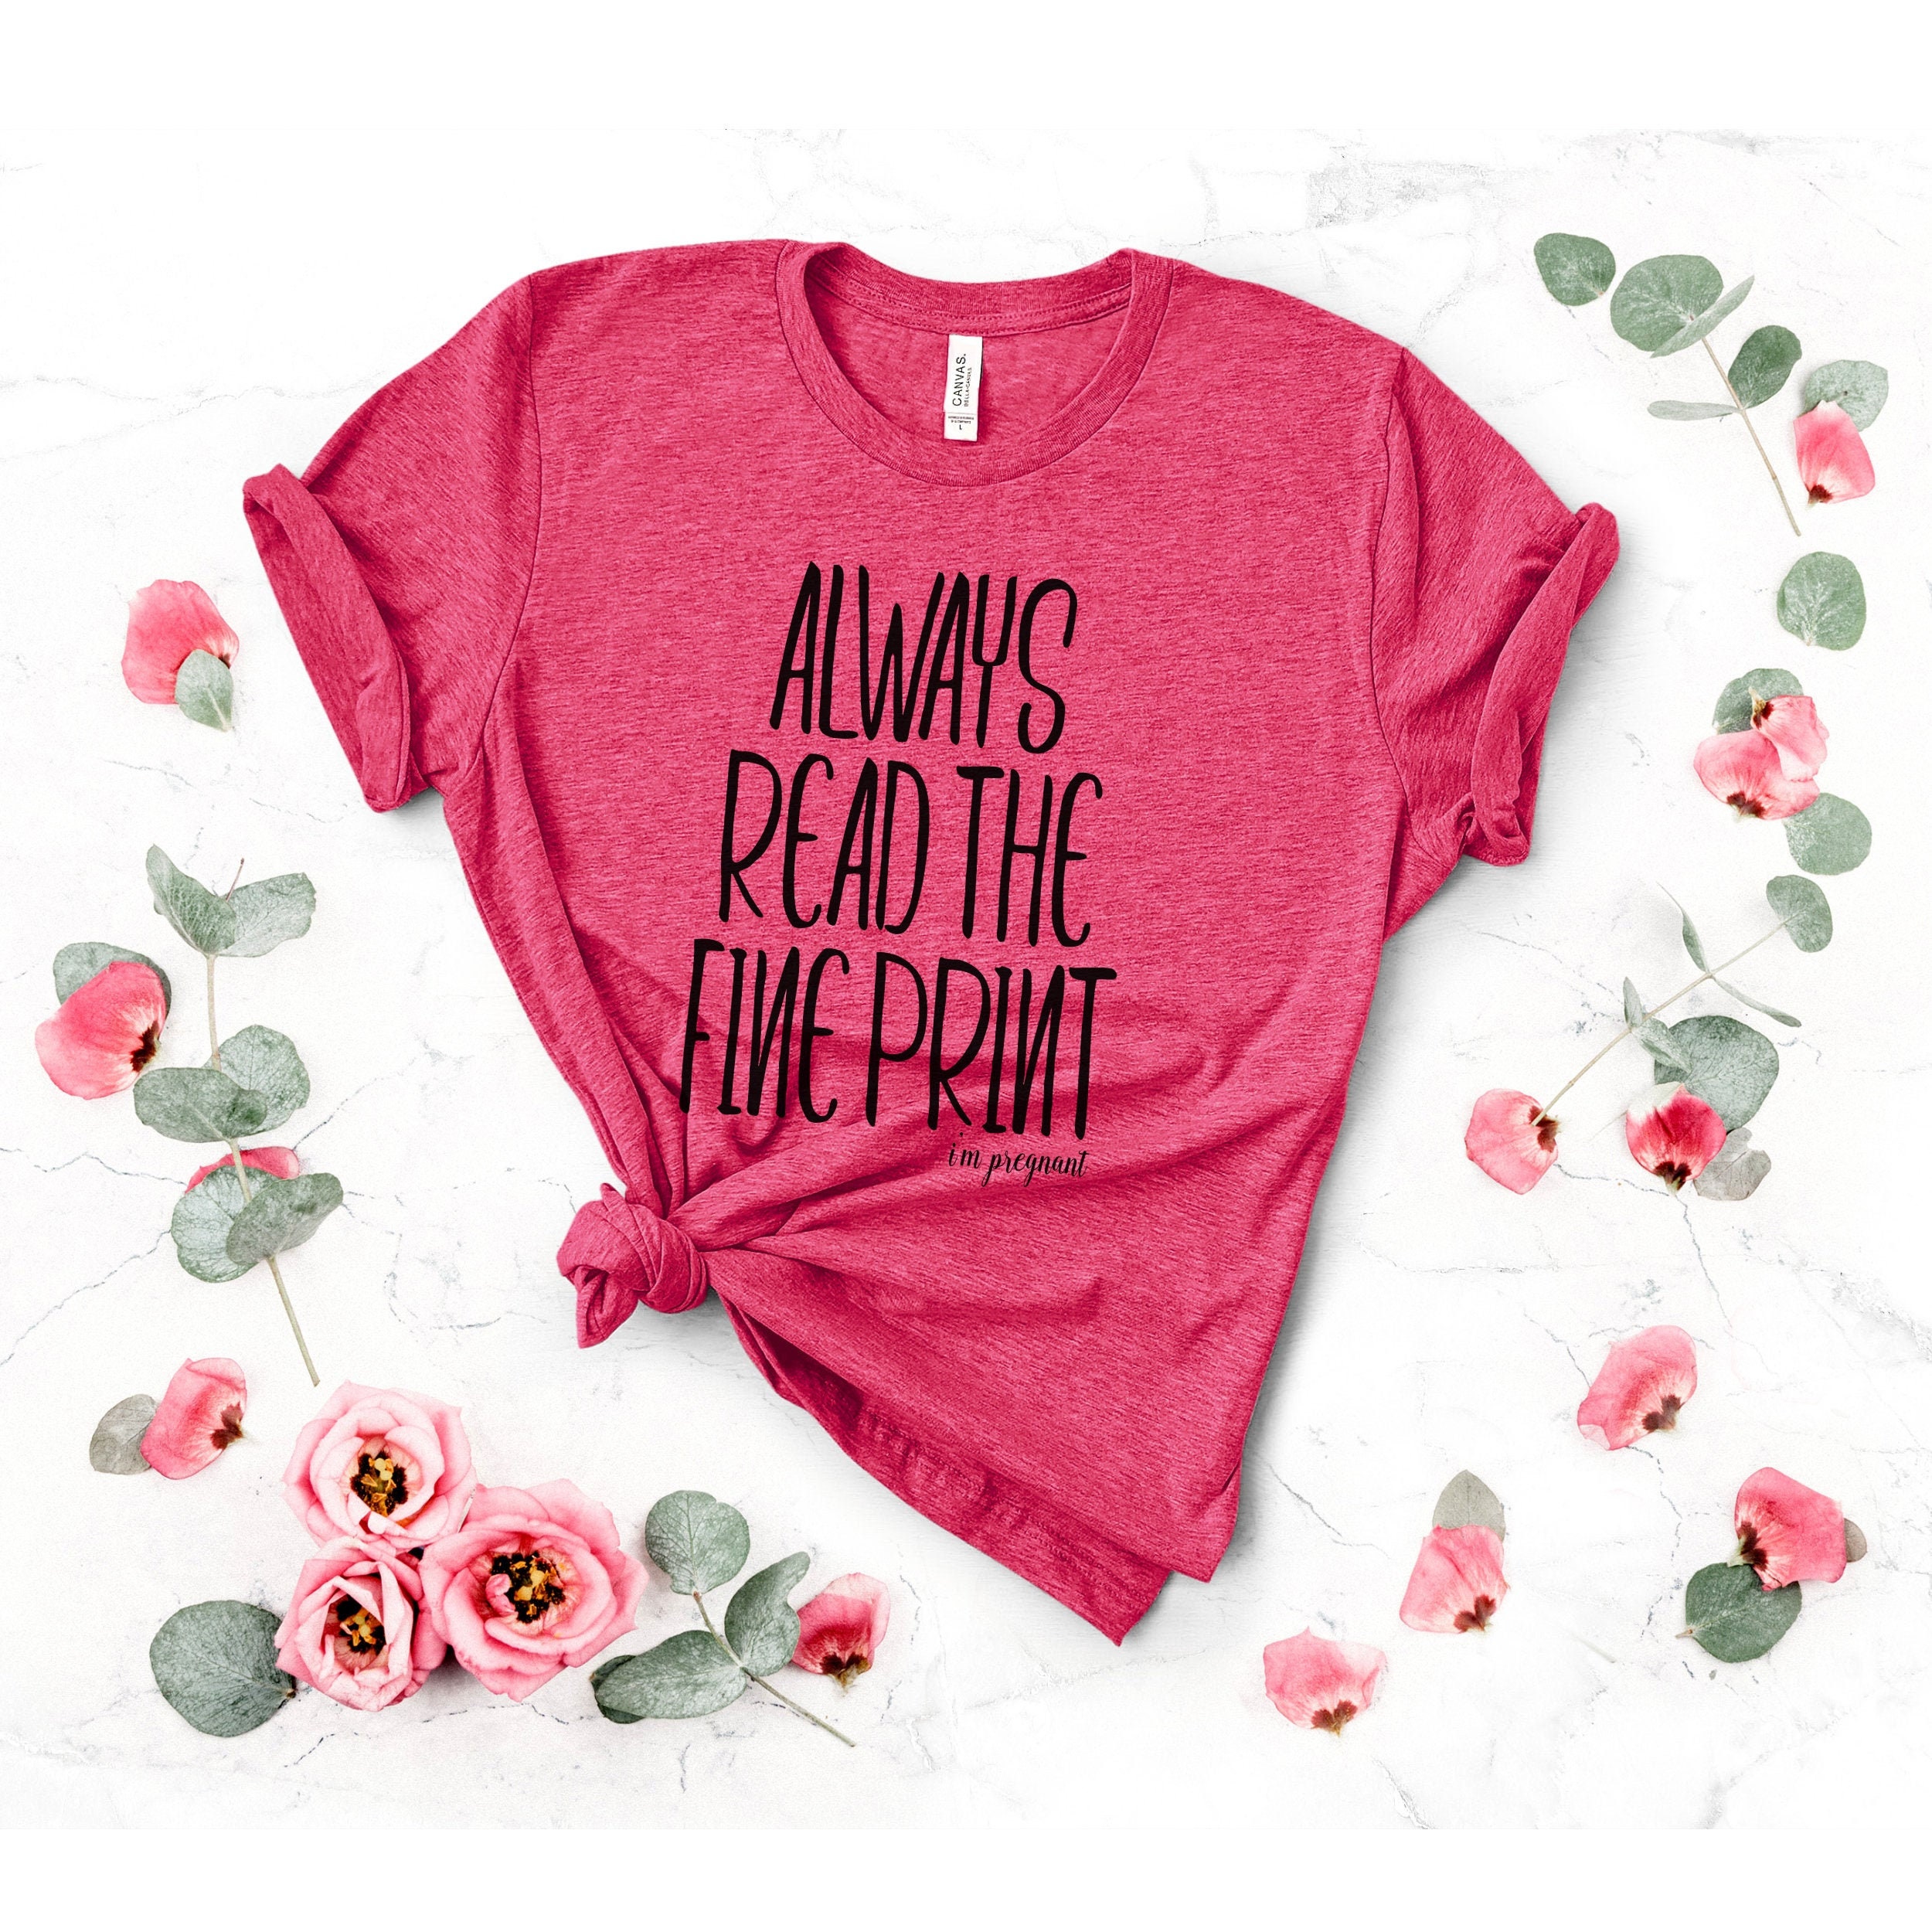 Read The Fineprint shirt Pregnant ShirtPregnancy | Etsy